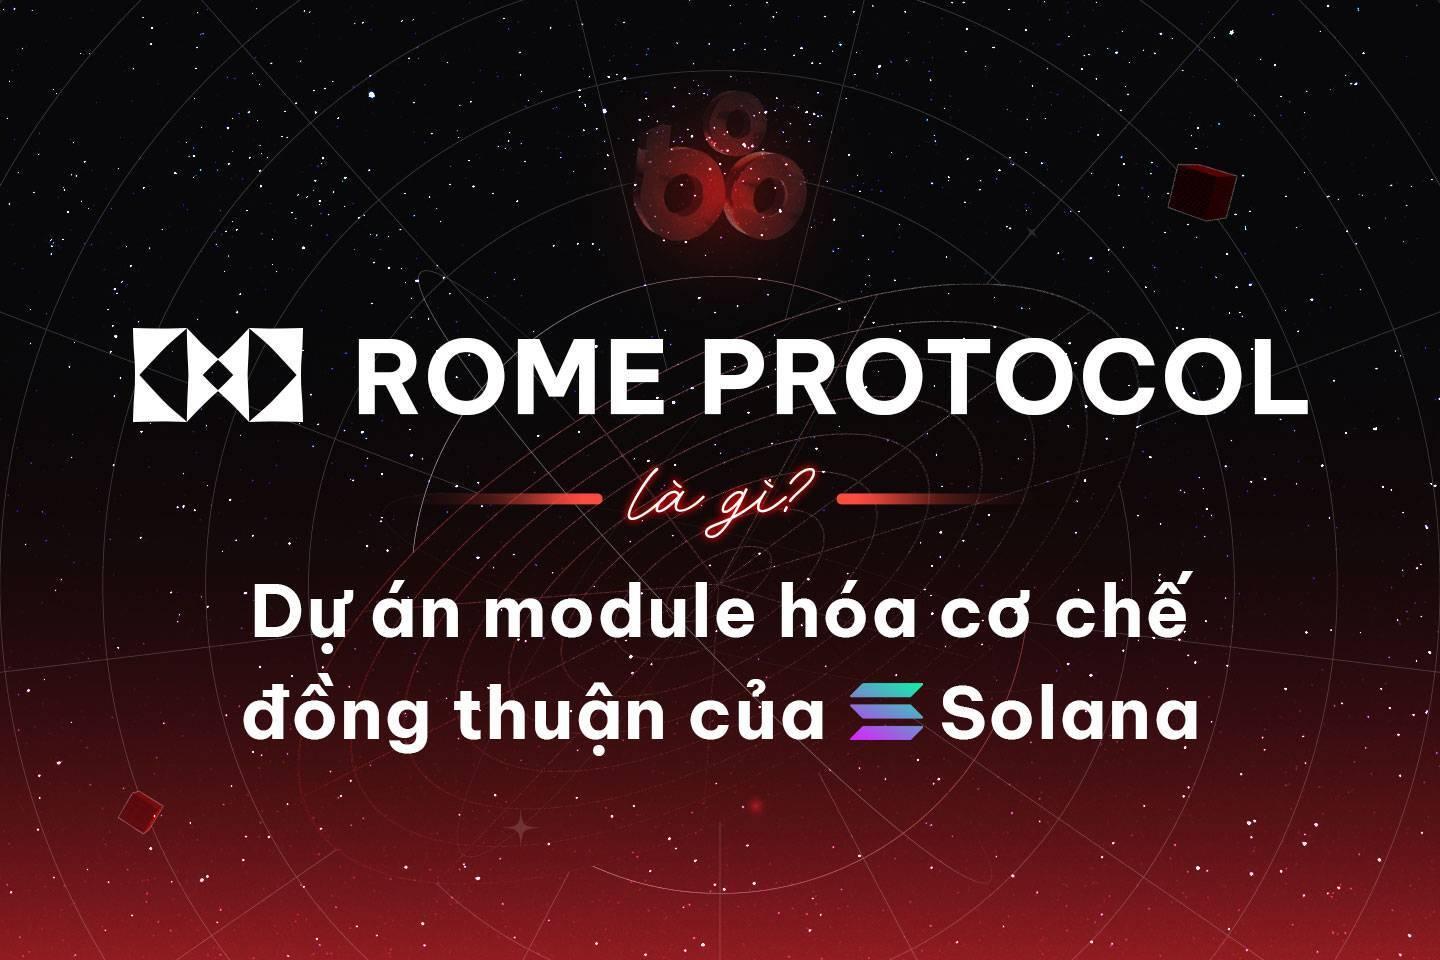 rome-protocol-la-gi-du-an-module-hoa-co-che-dong-thuan-cua-solana